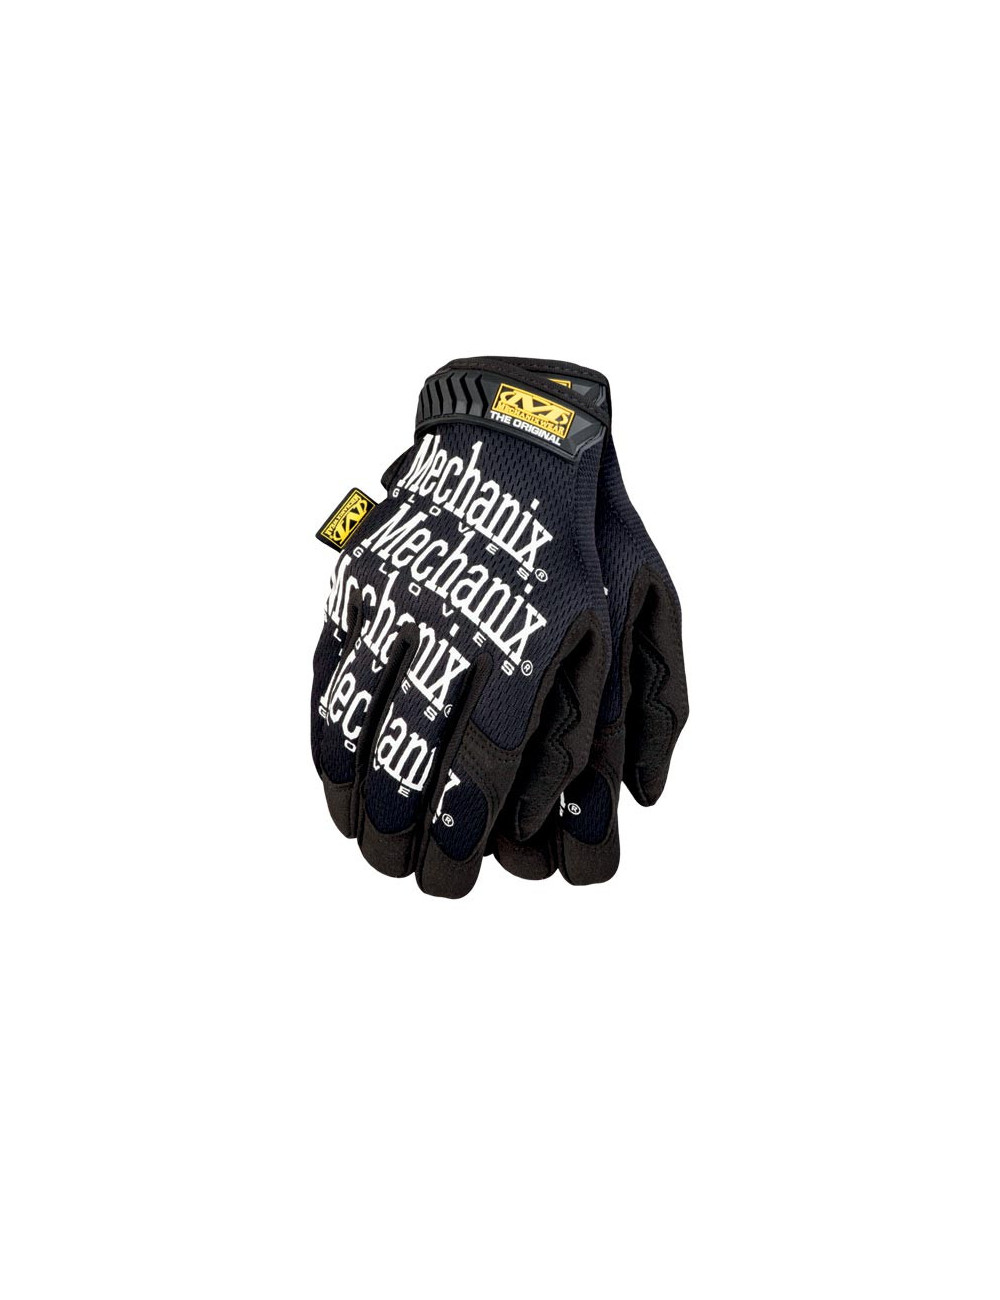 Protective gloves rm-original bw black/white Mechanix